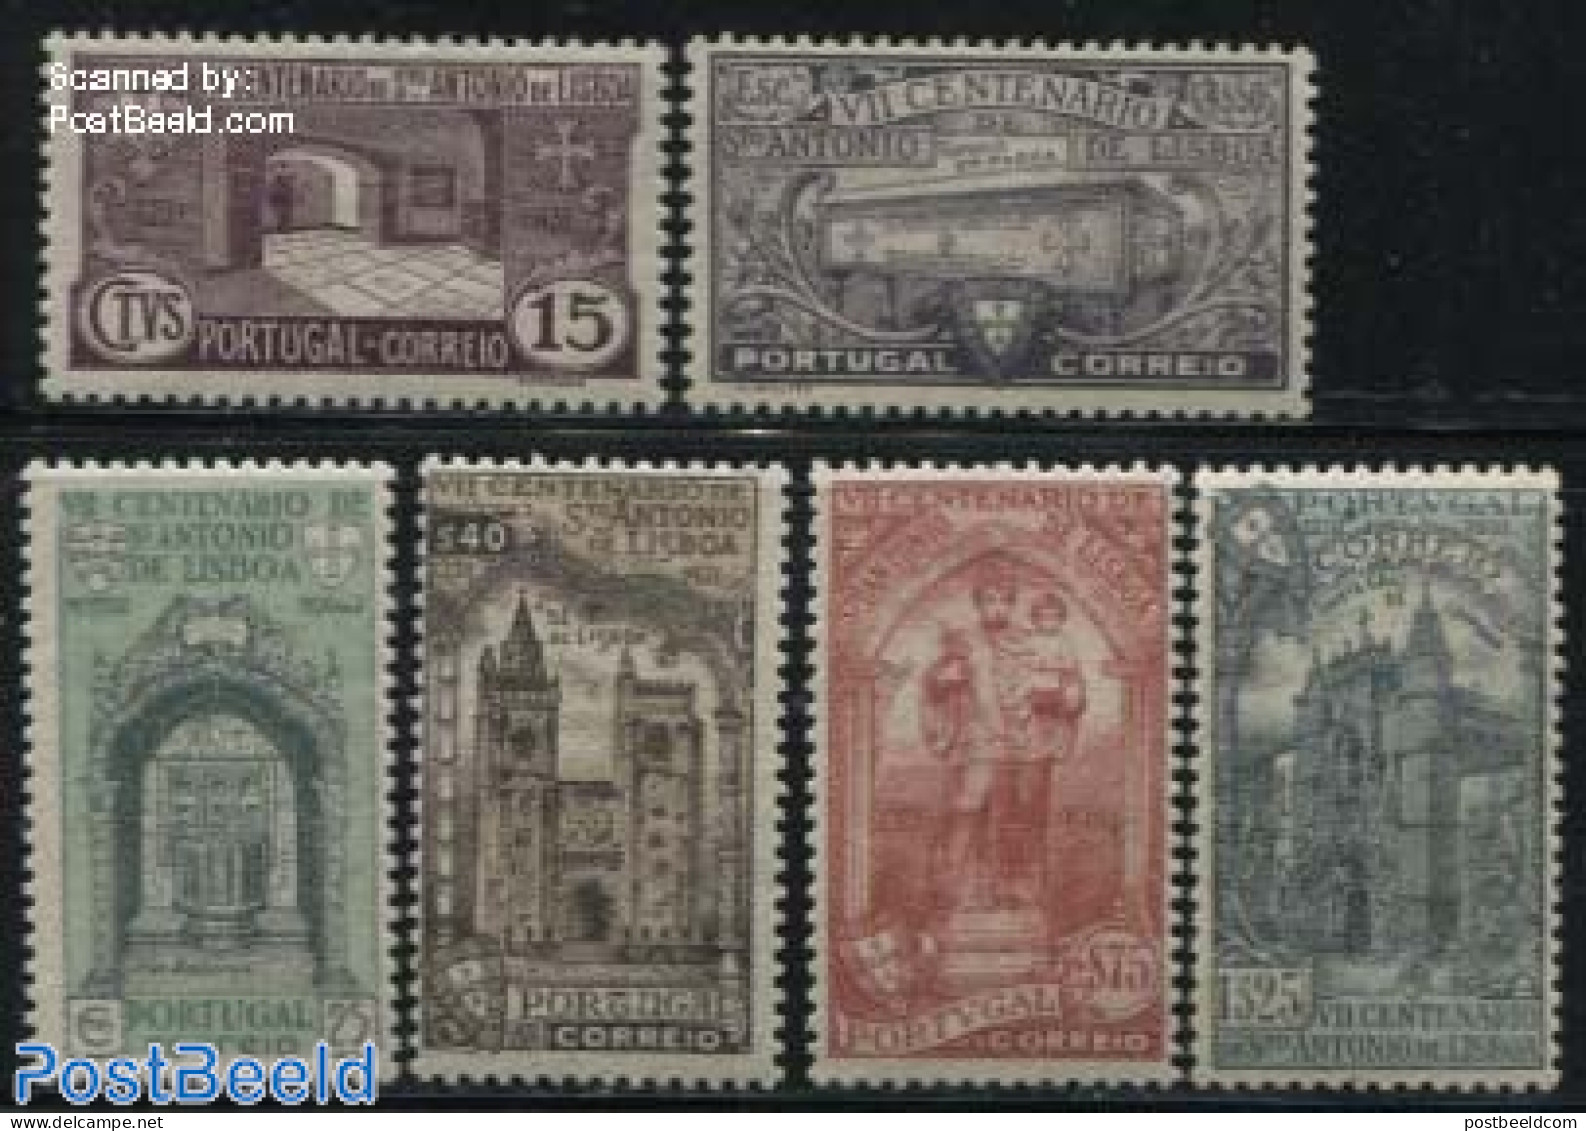 Portugal 1931 St. Antonius Of Padua 6v, Unused (hinged), Religion - Churches, Temples, Mosques, Synagogues - Religion - Unused Stamps